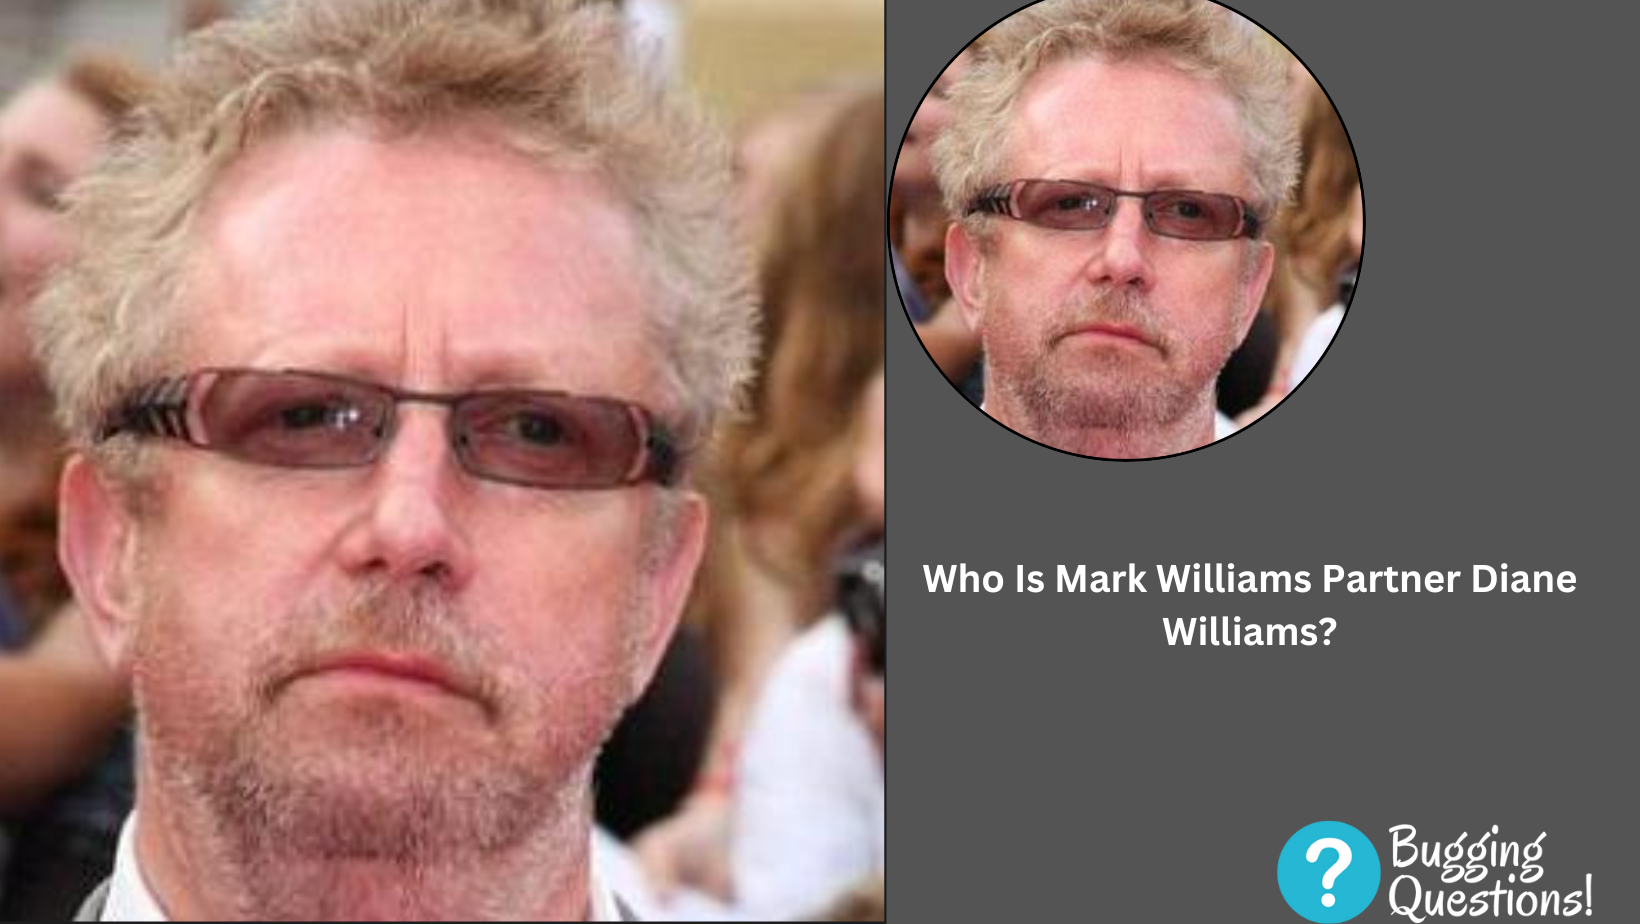 Who Is Mark Williams Partner Diane Williams?